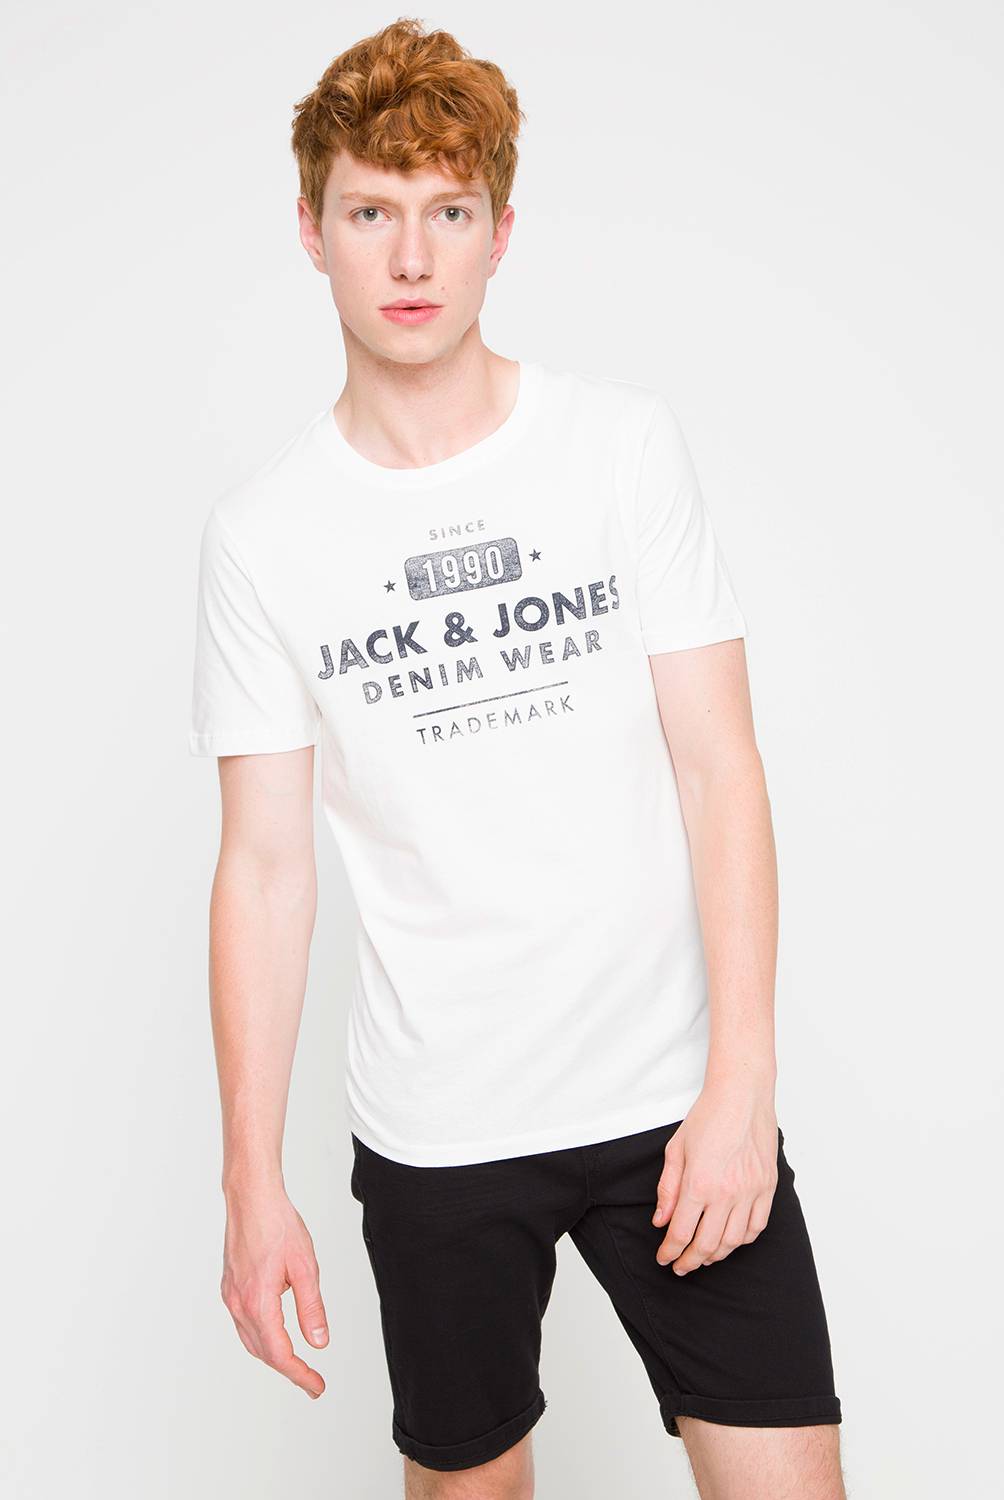 JACK AND JONES_MC - Polera